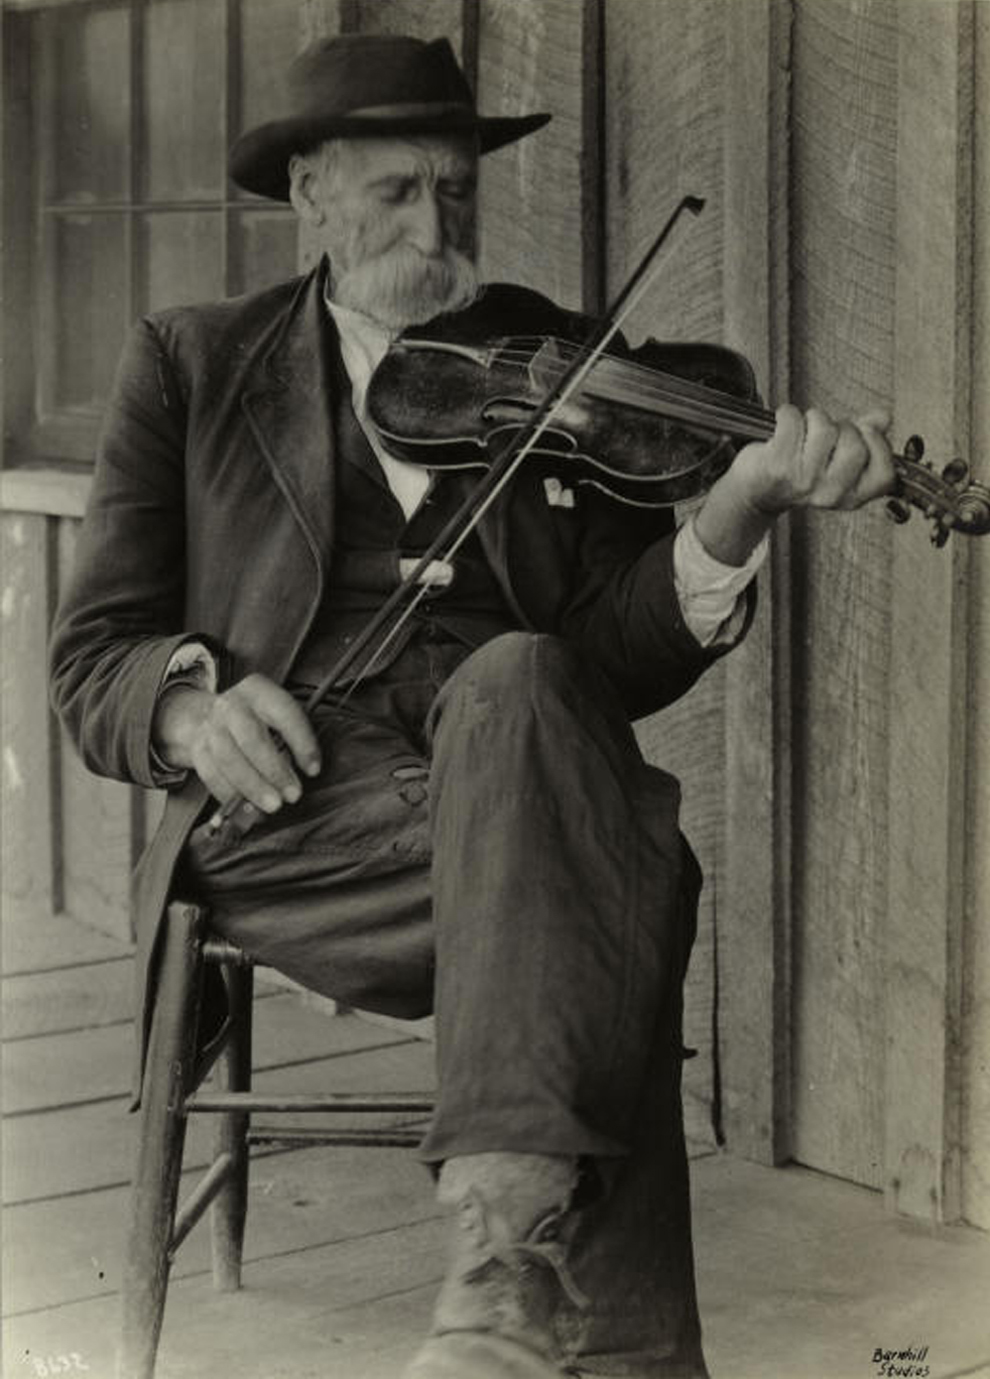 Country Fiddler